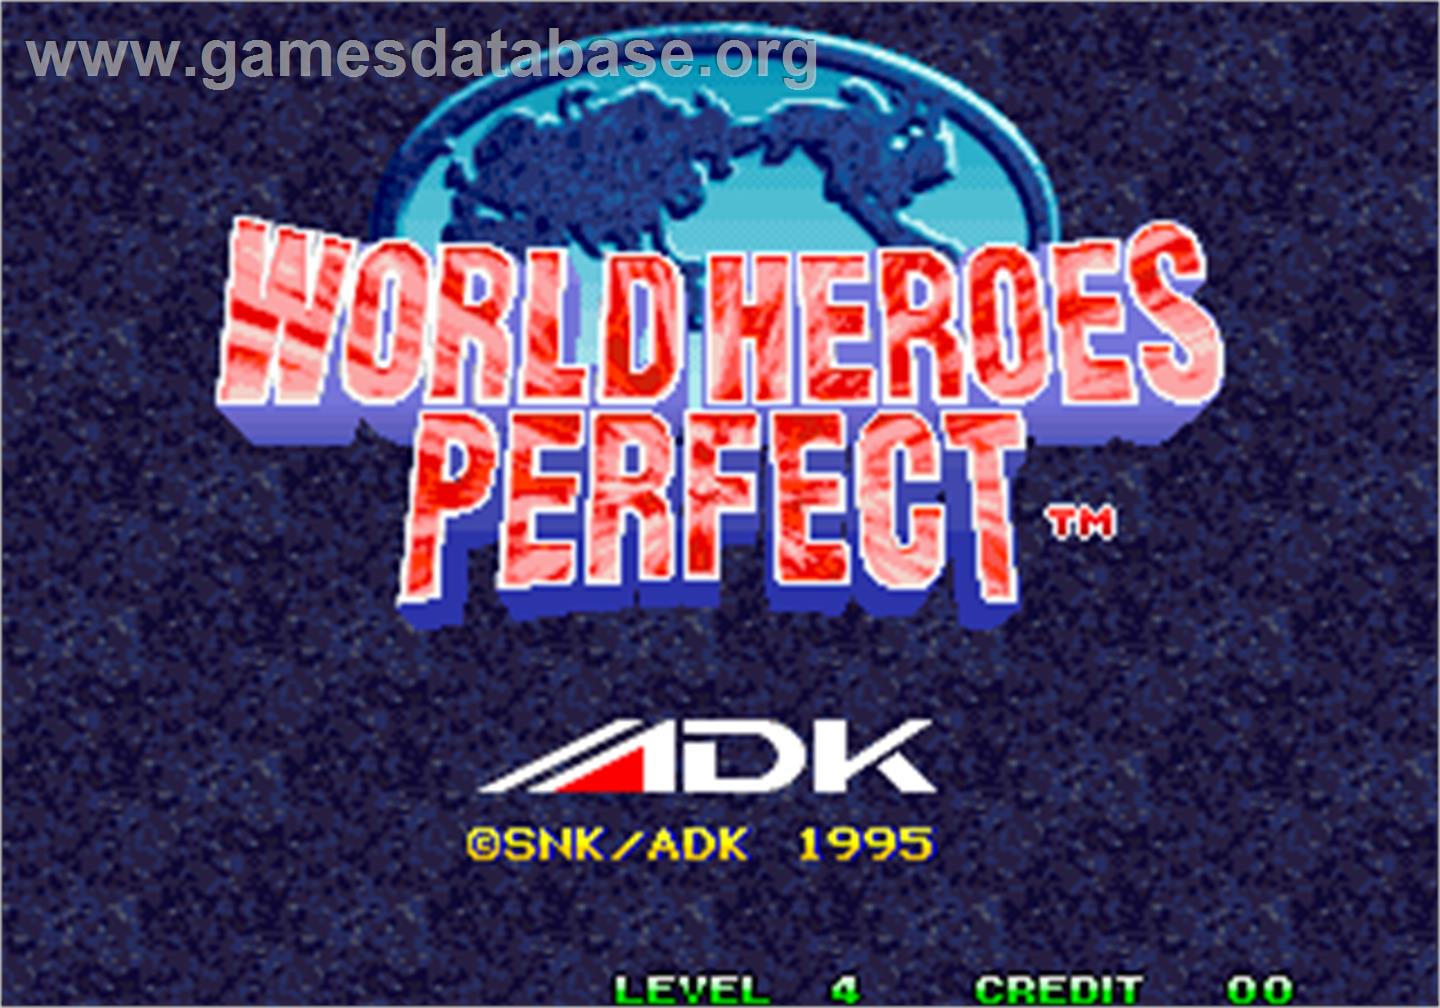 World Heroes Perfect - Arcade - Artwork - Title Screen